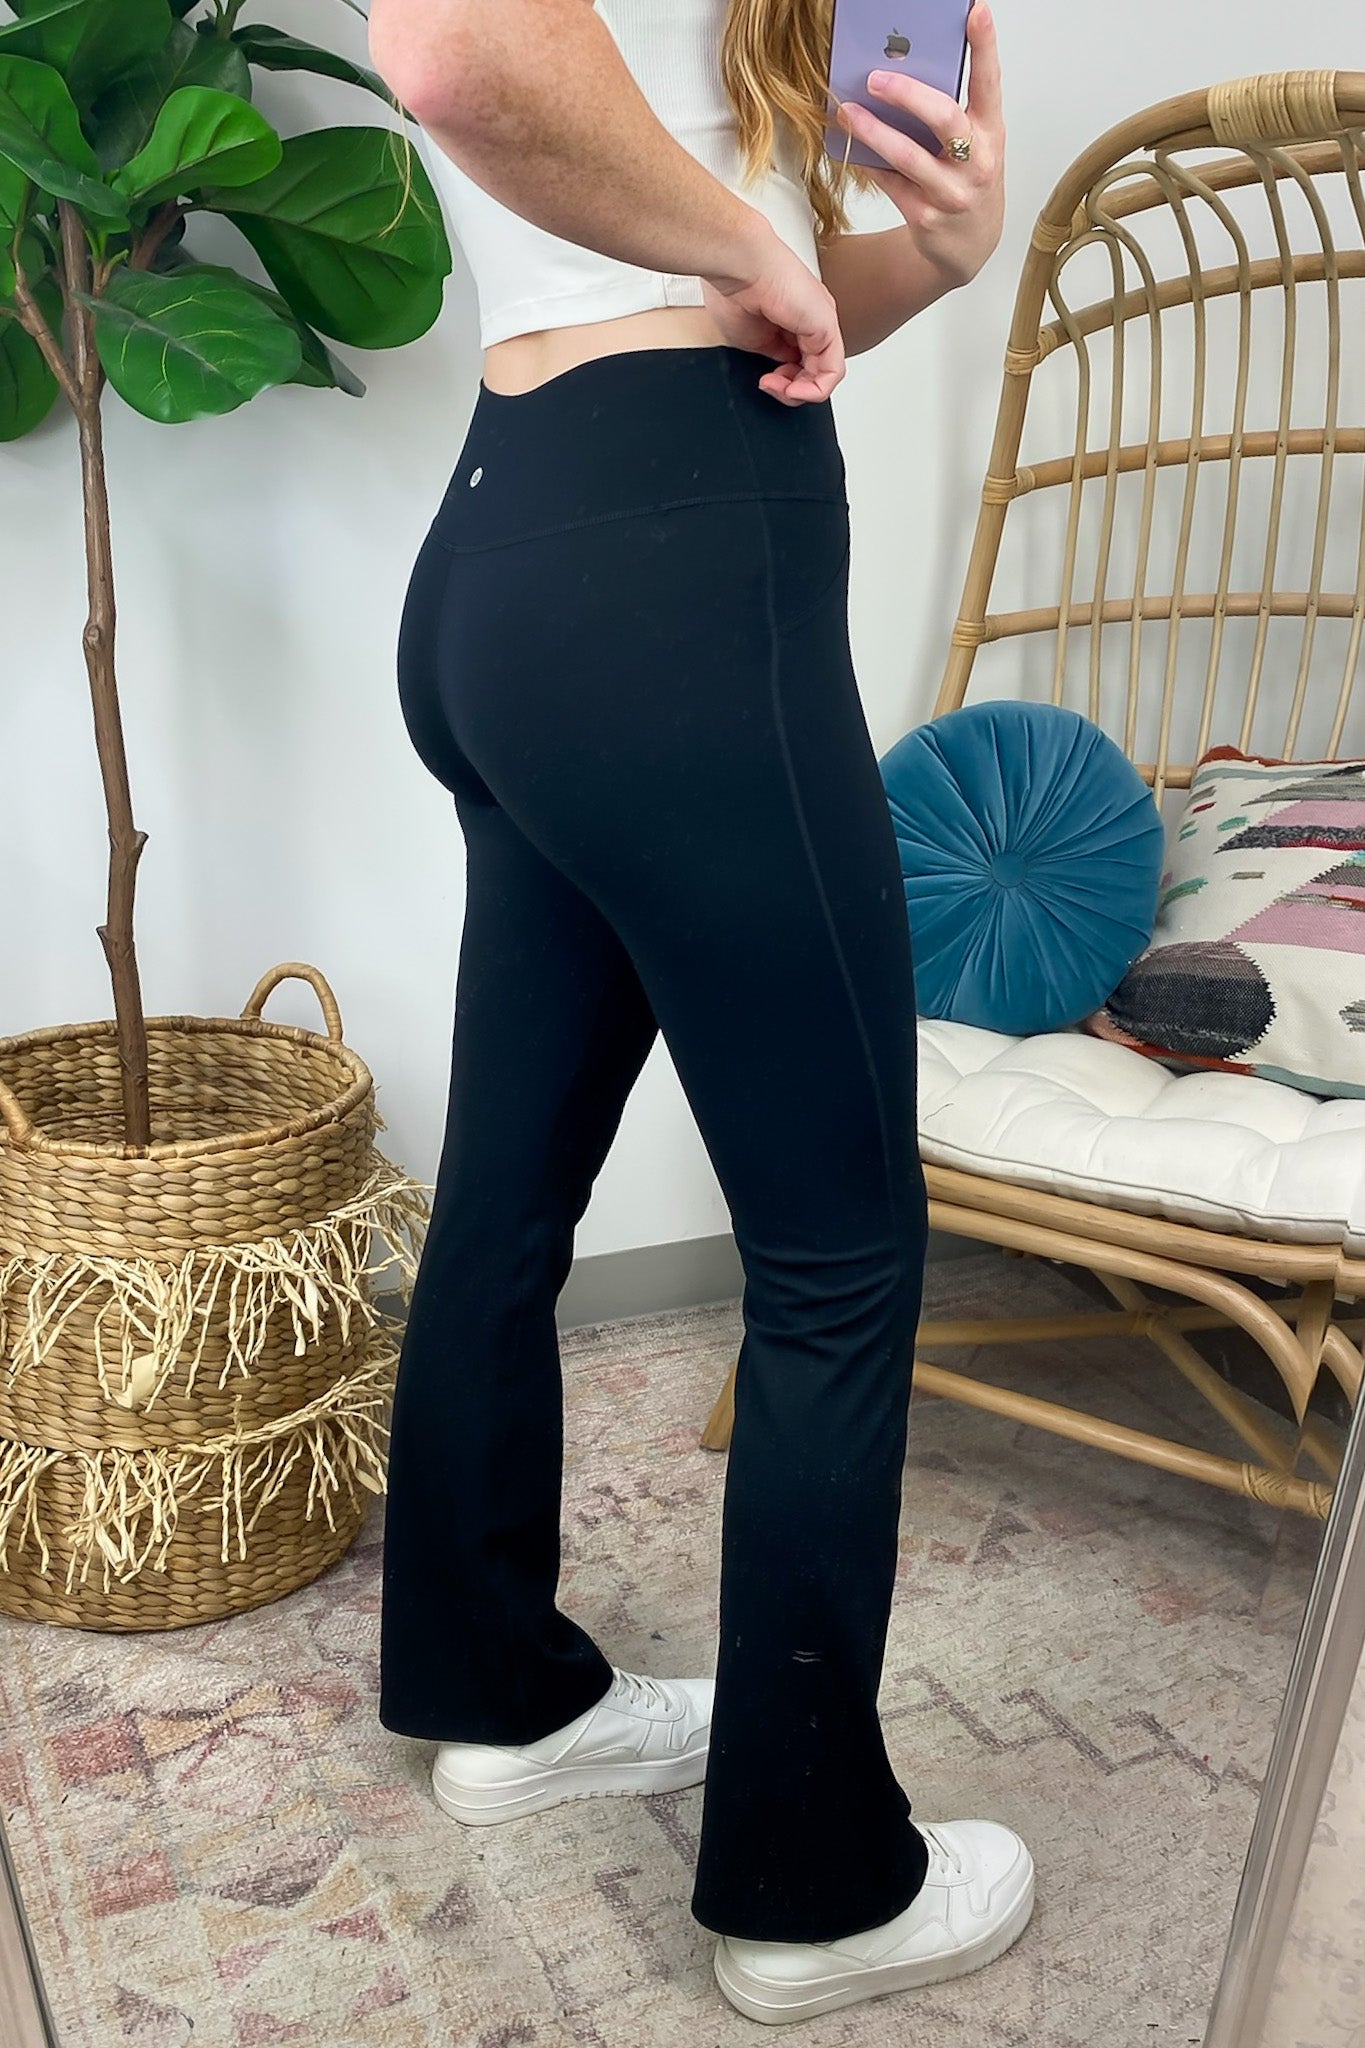 Lululemon Noir Pants - Size 4 Worn once - Depop